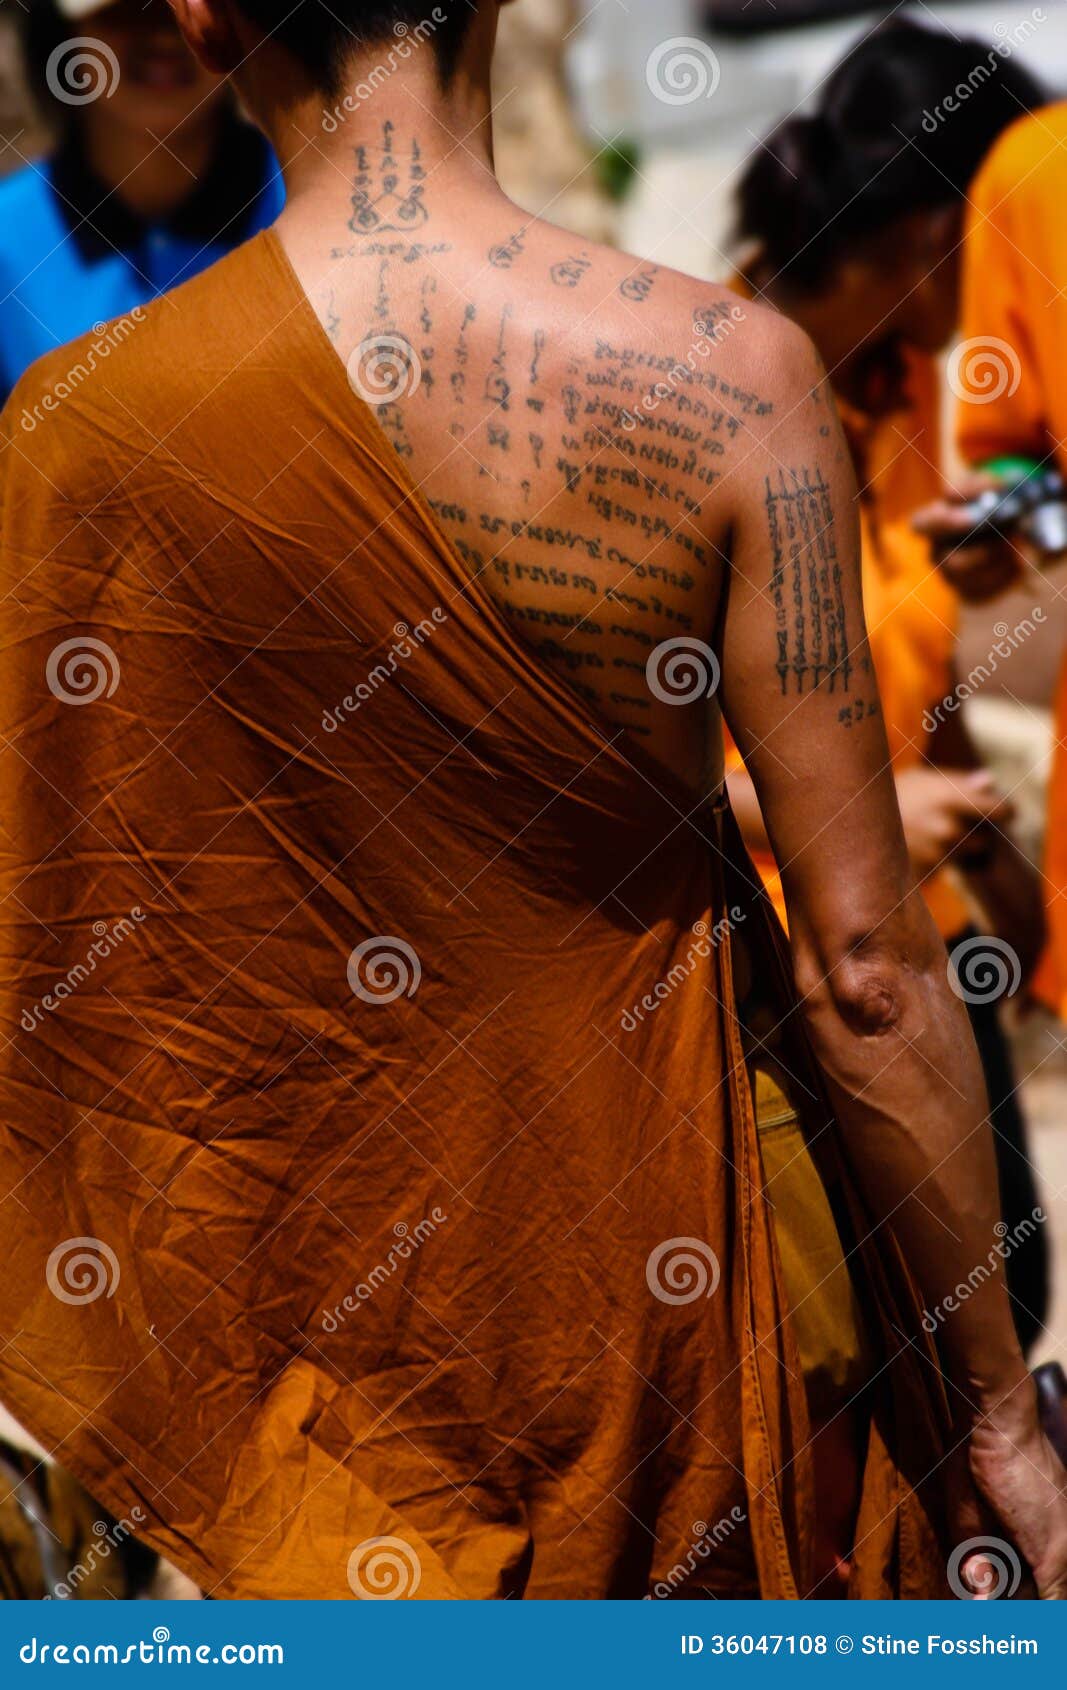 Tattooed Monk Editorial Stock Photo - Image: 36047108